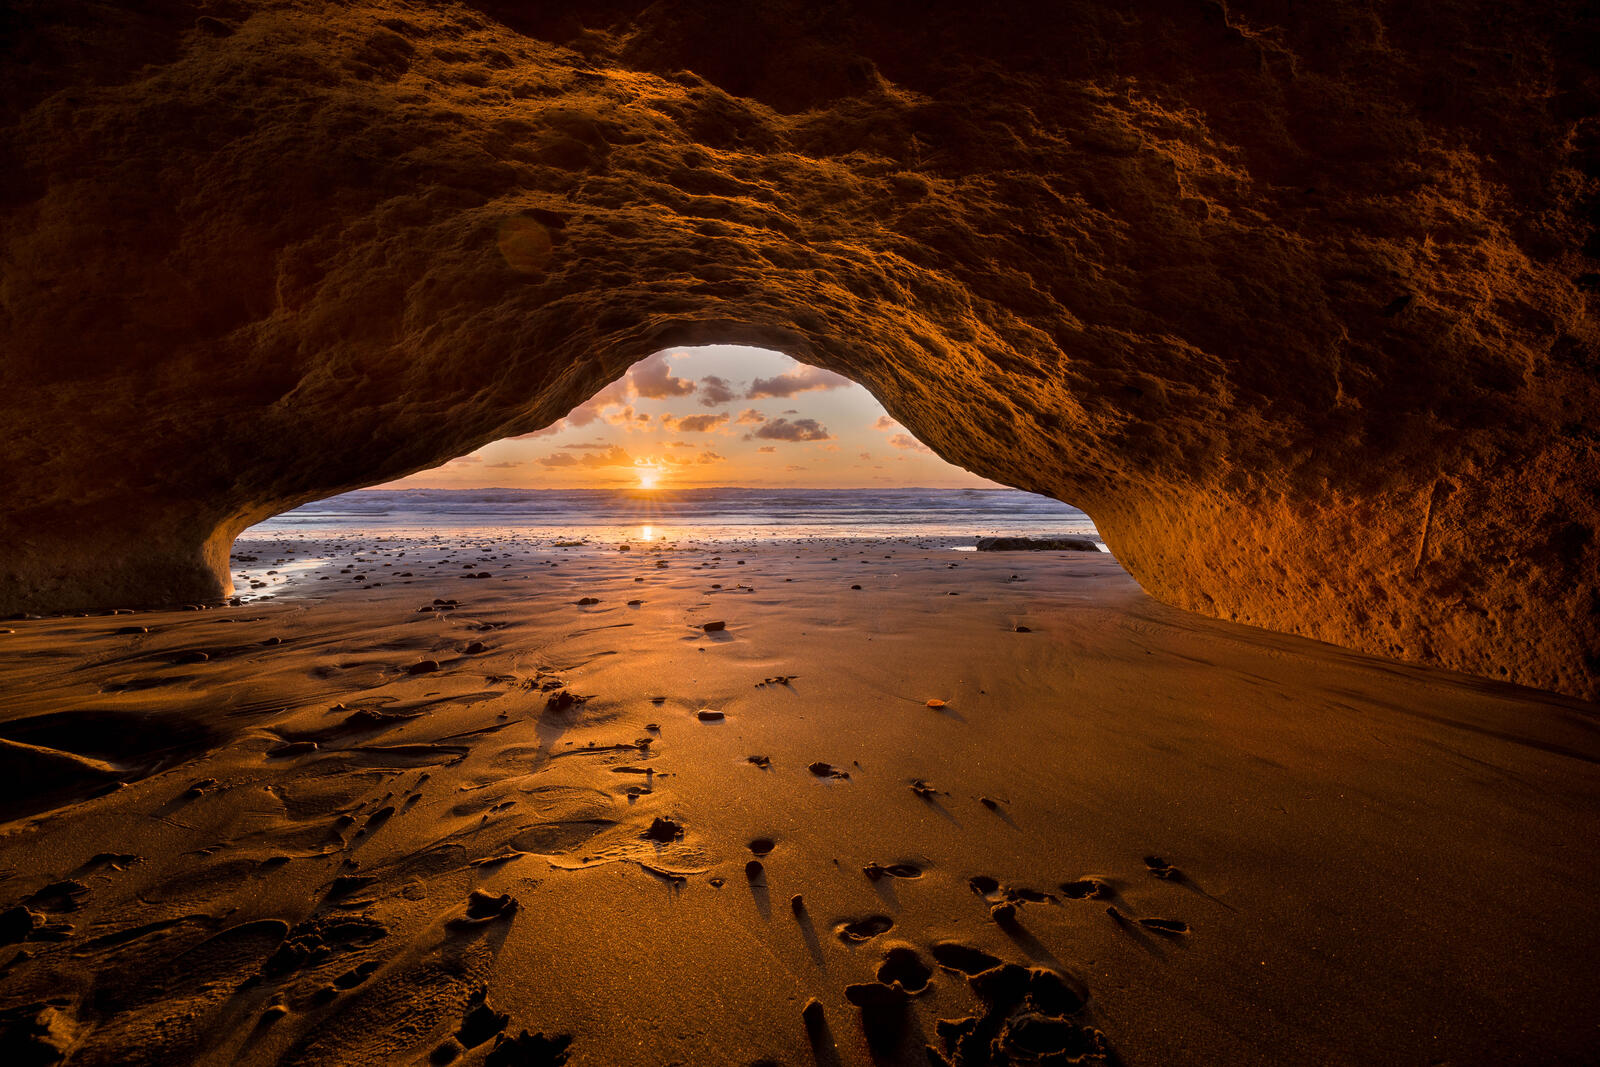 Wallpapers San Diego solana beach sea cave on the desktop